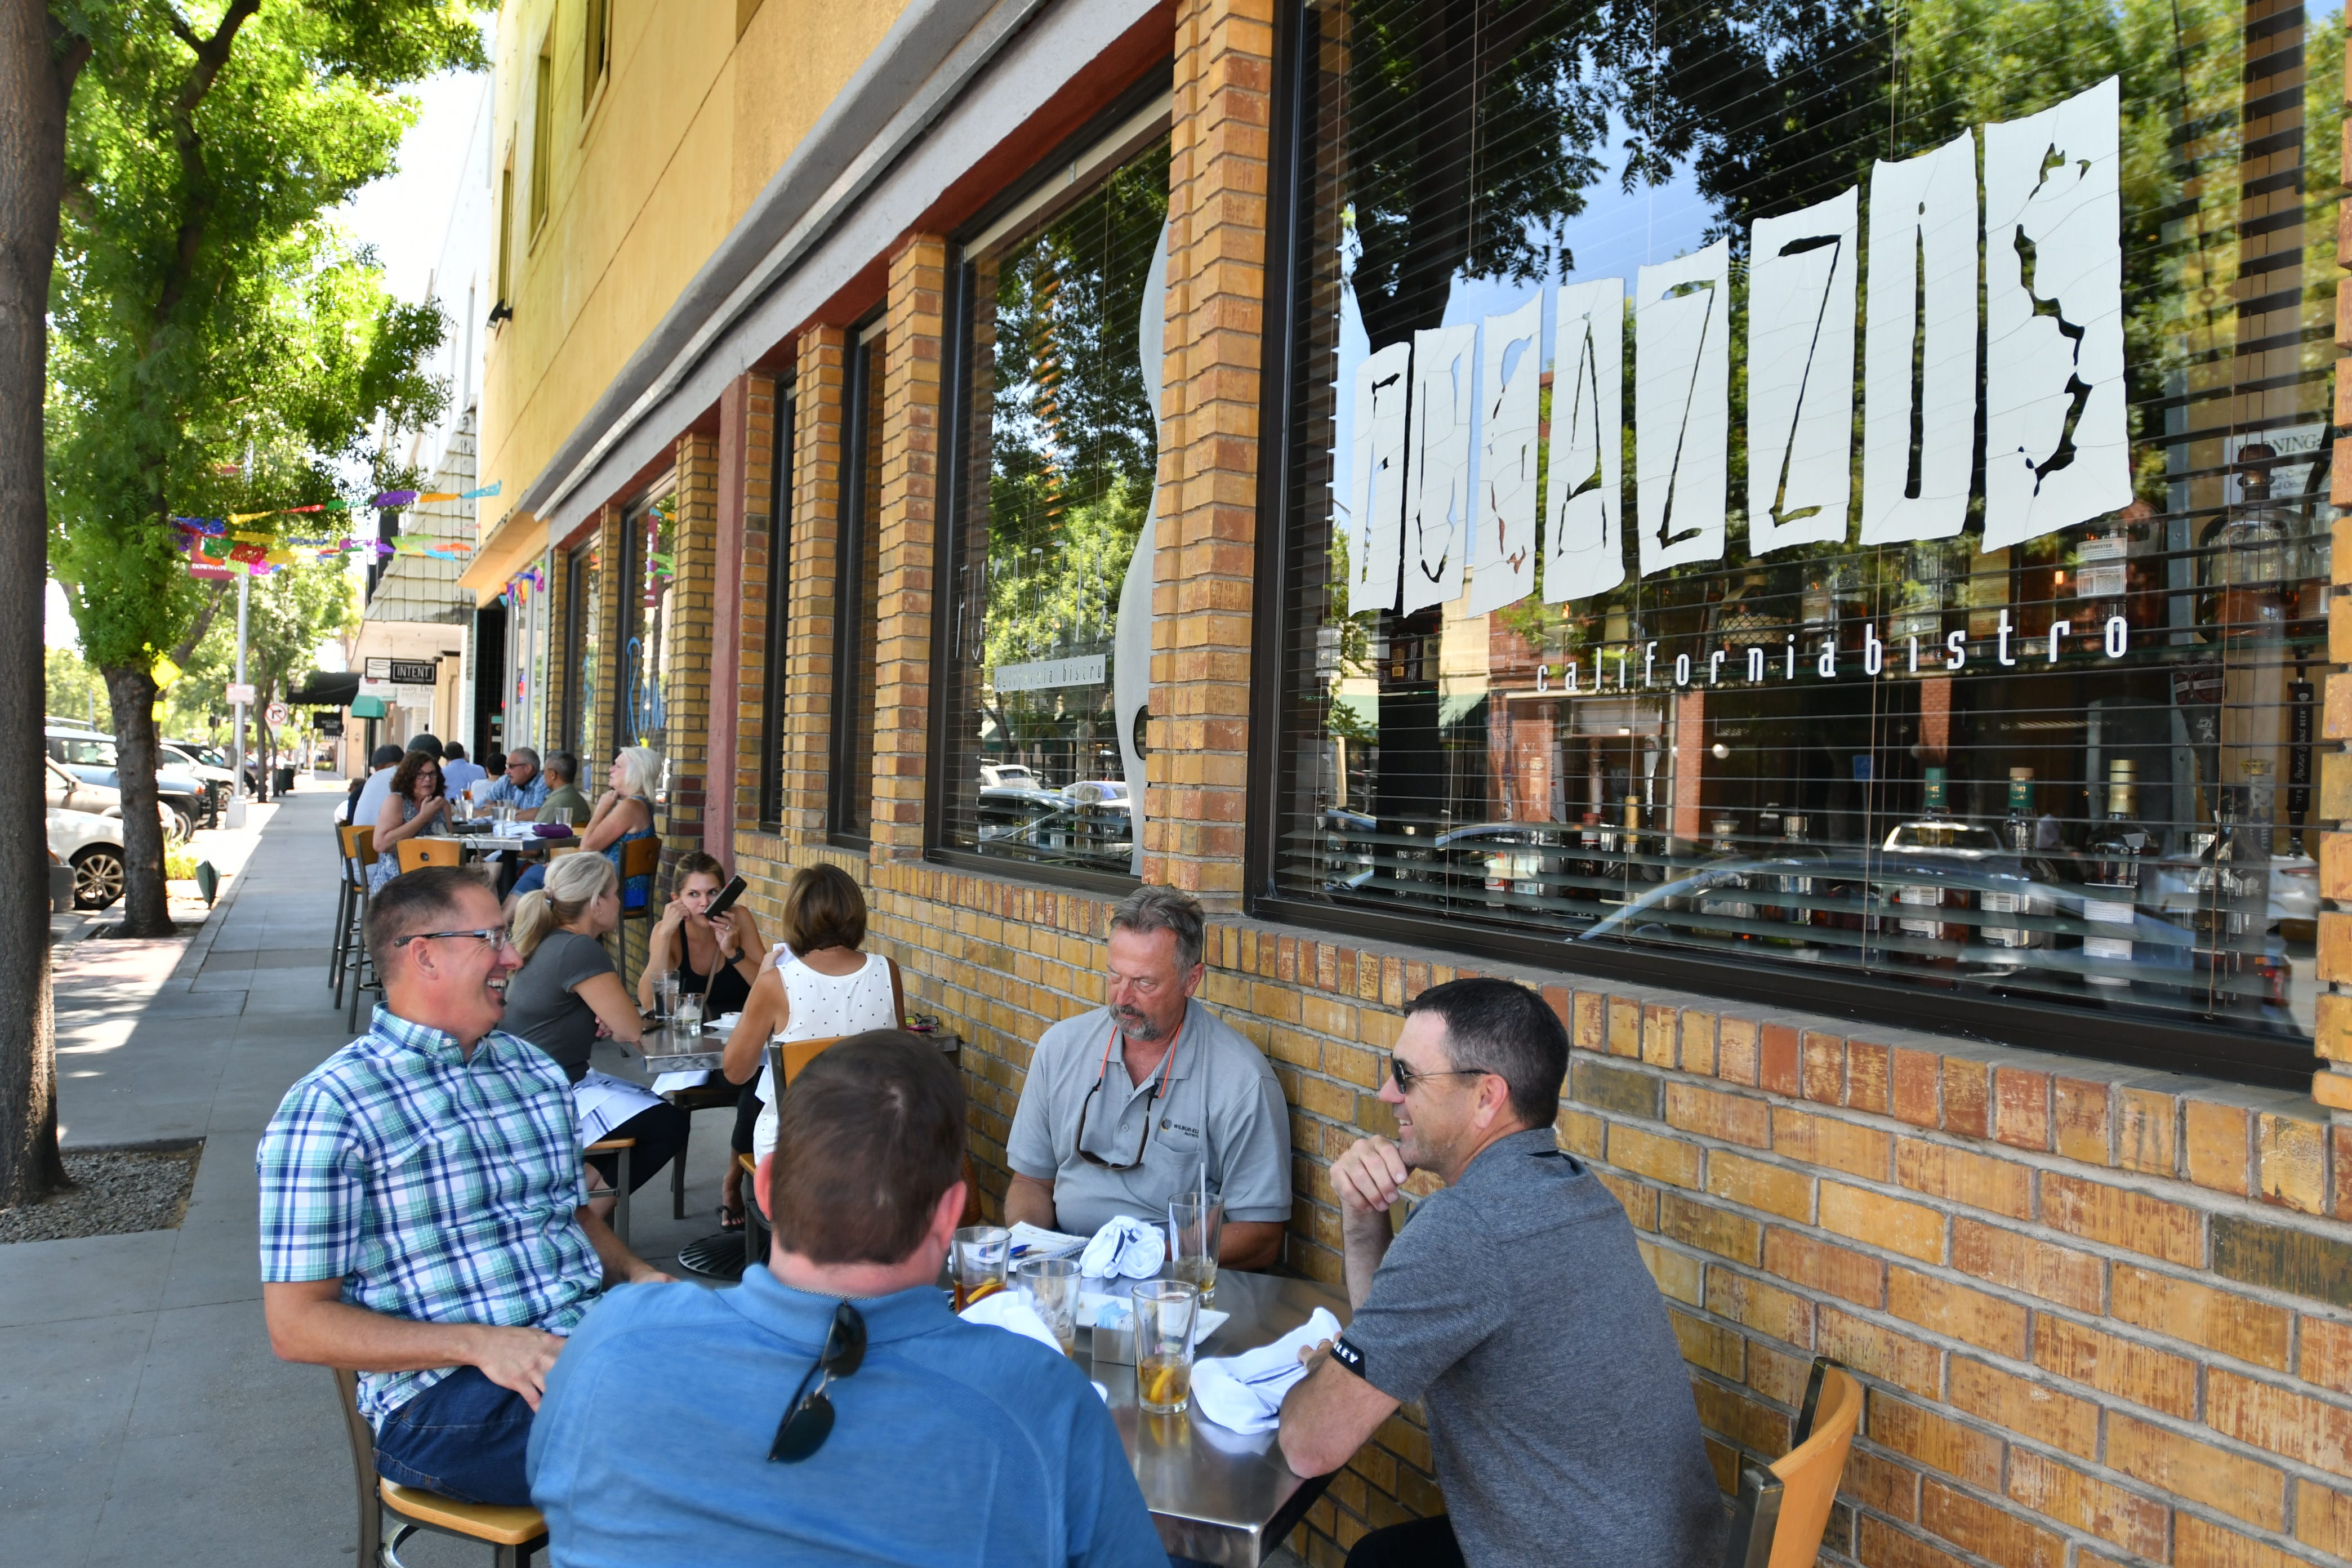 Visalia to open sidewalks for restaurants after new virus closures